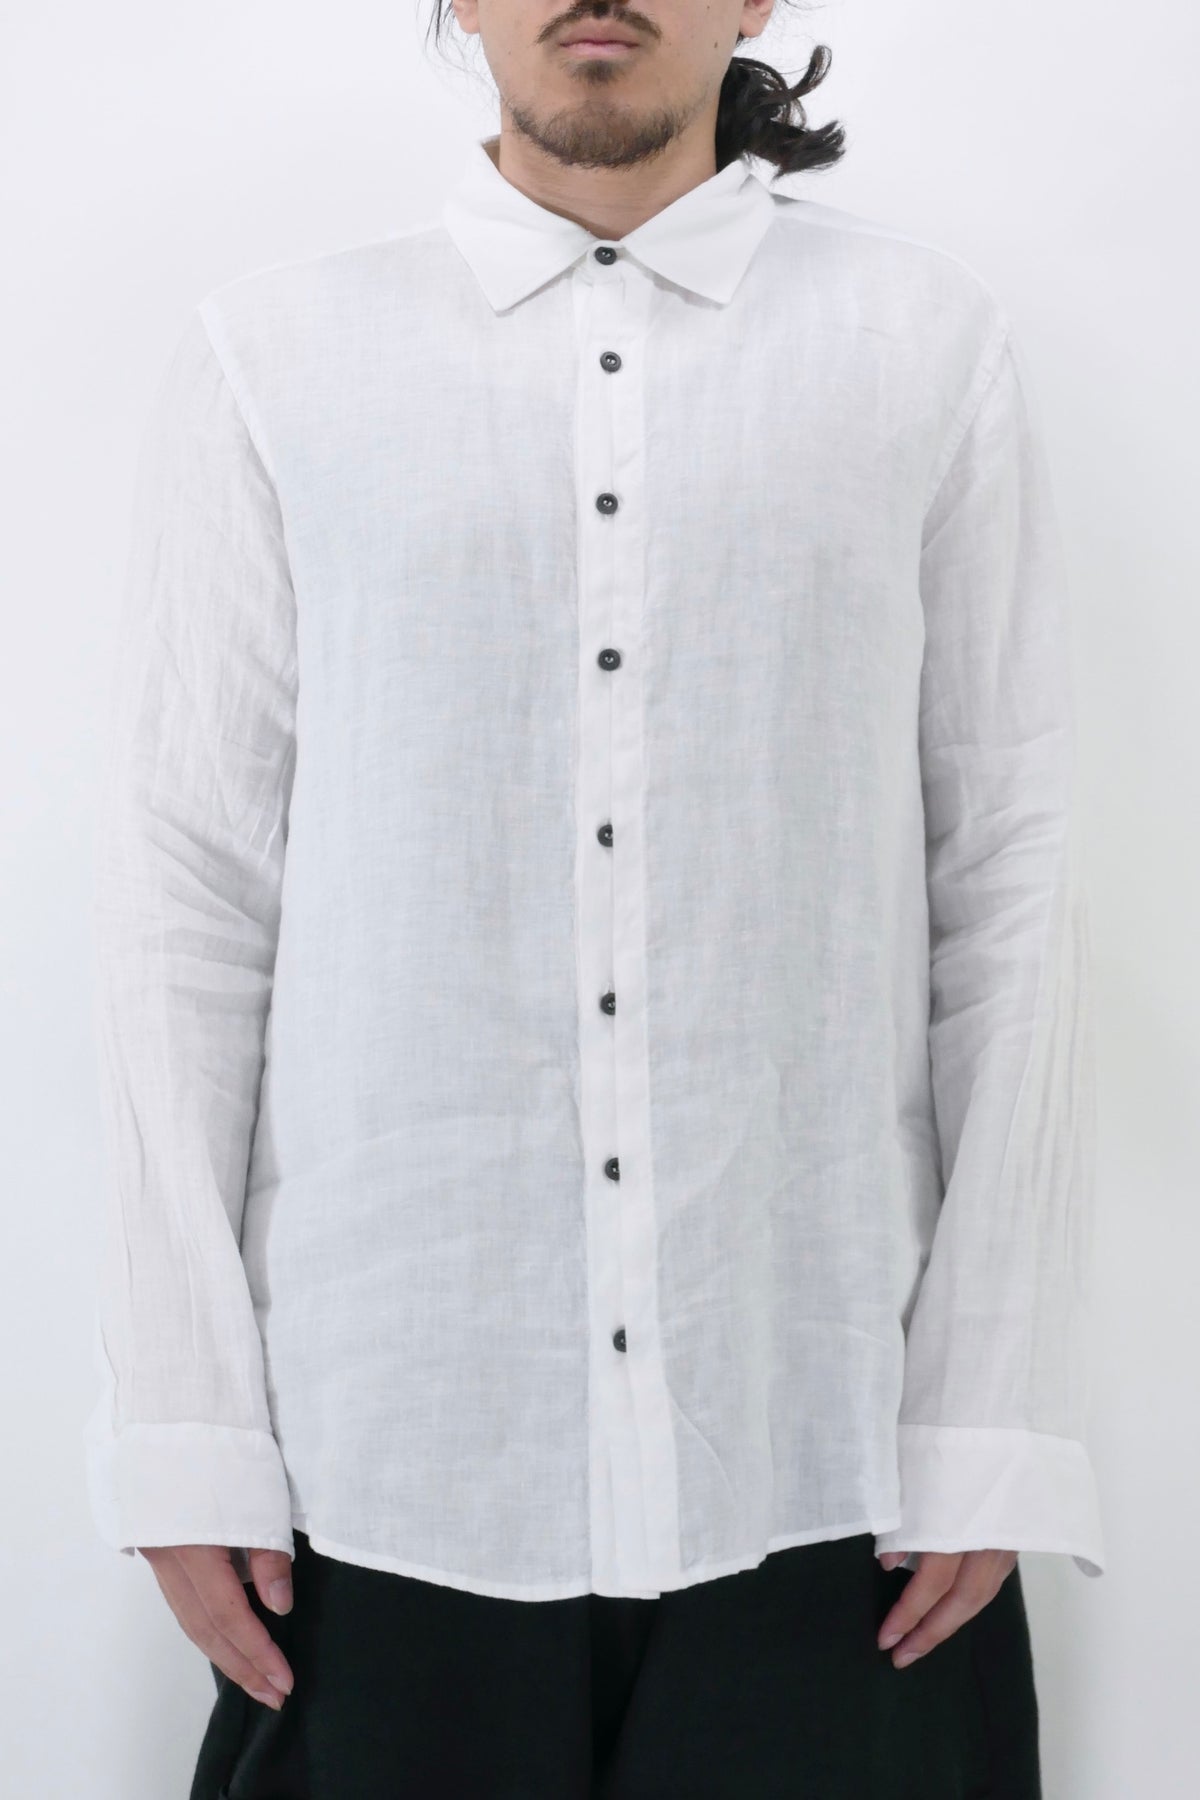 Athoa Double Classic Collar Shirt - White